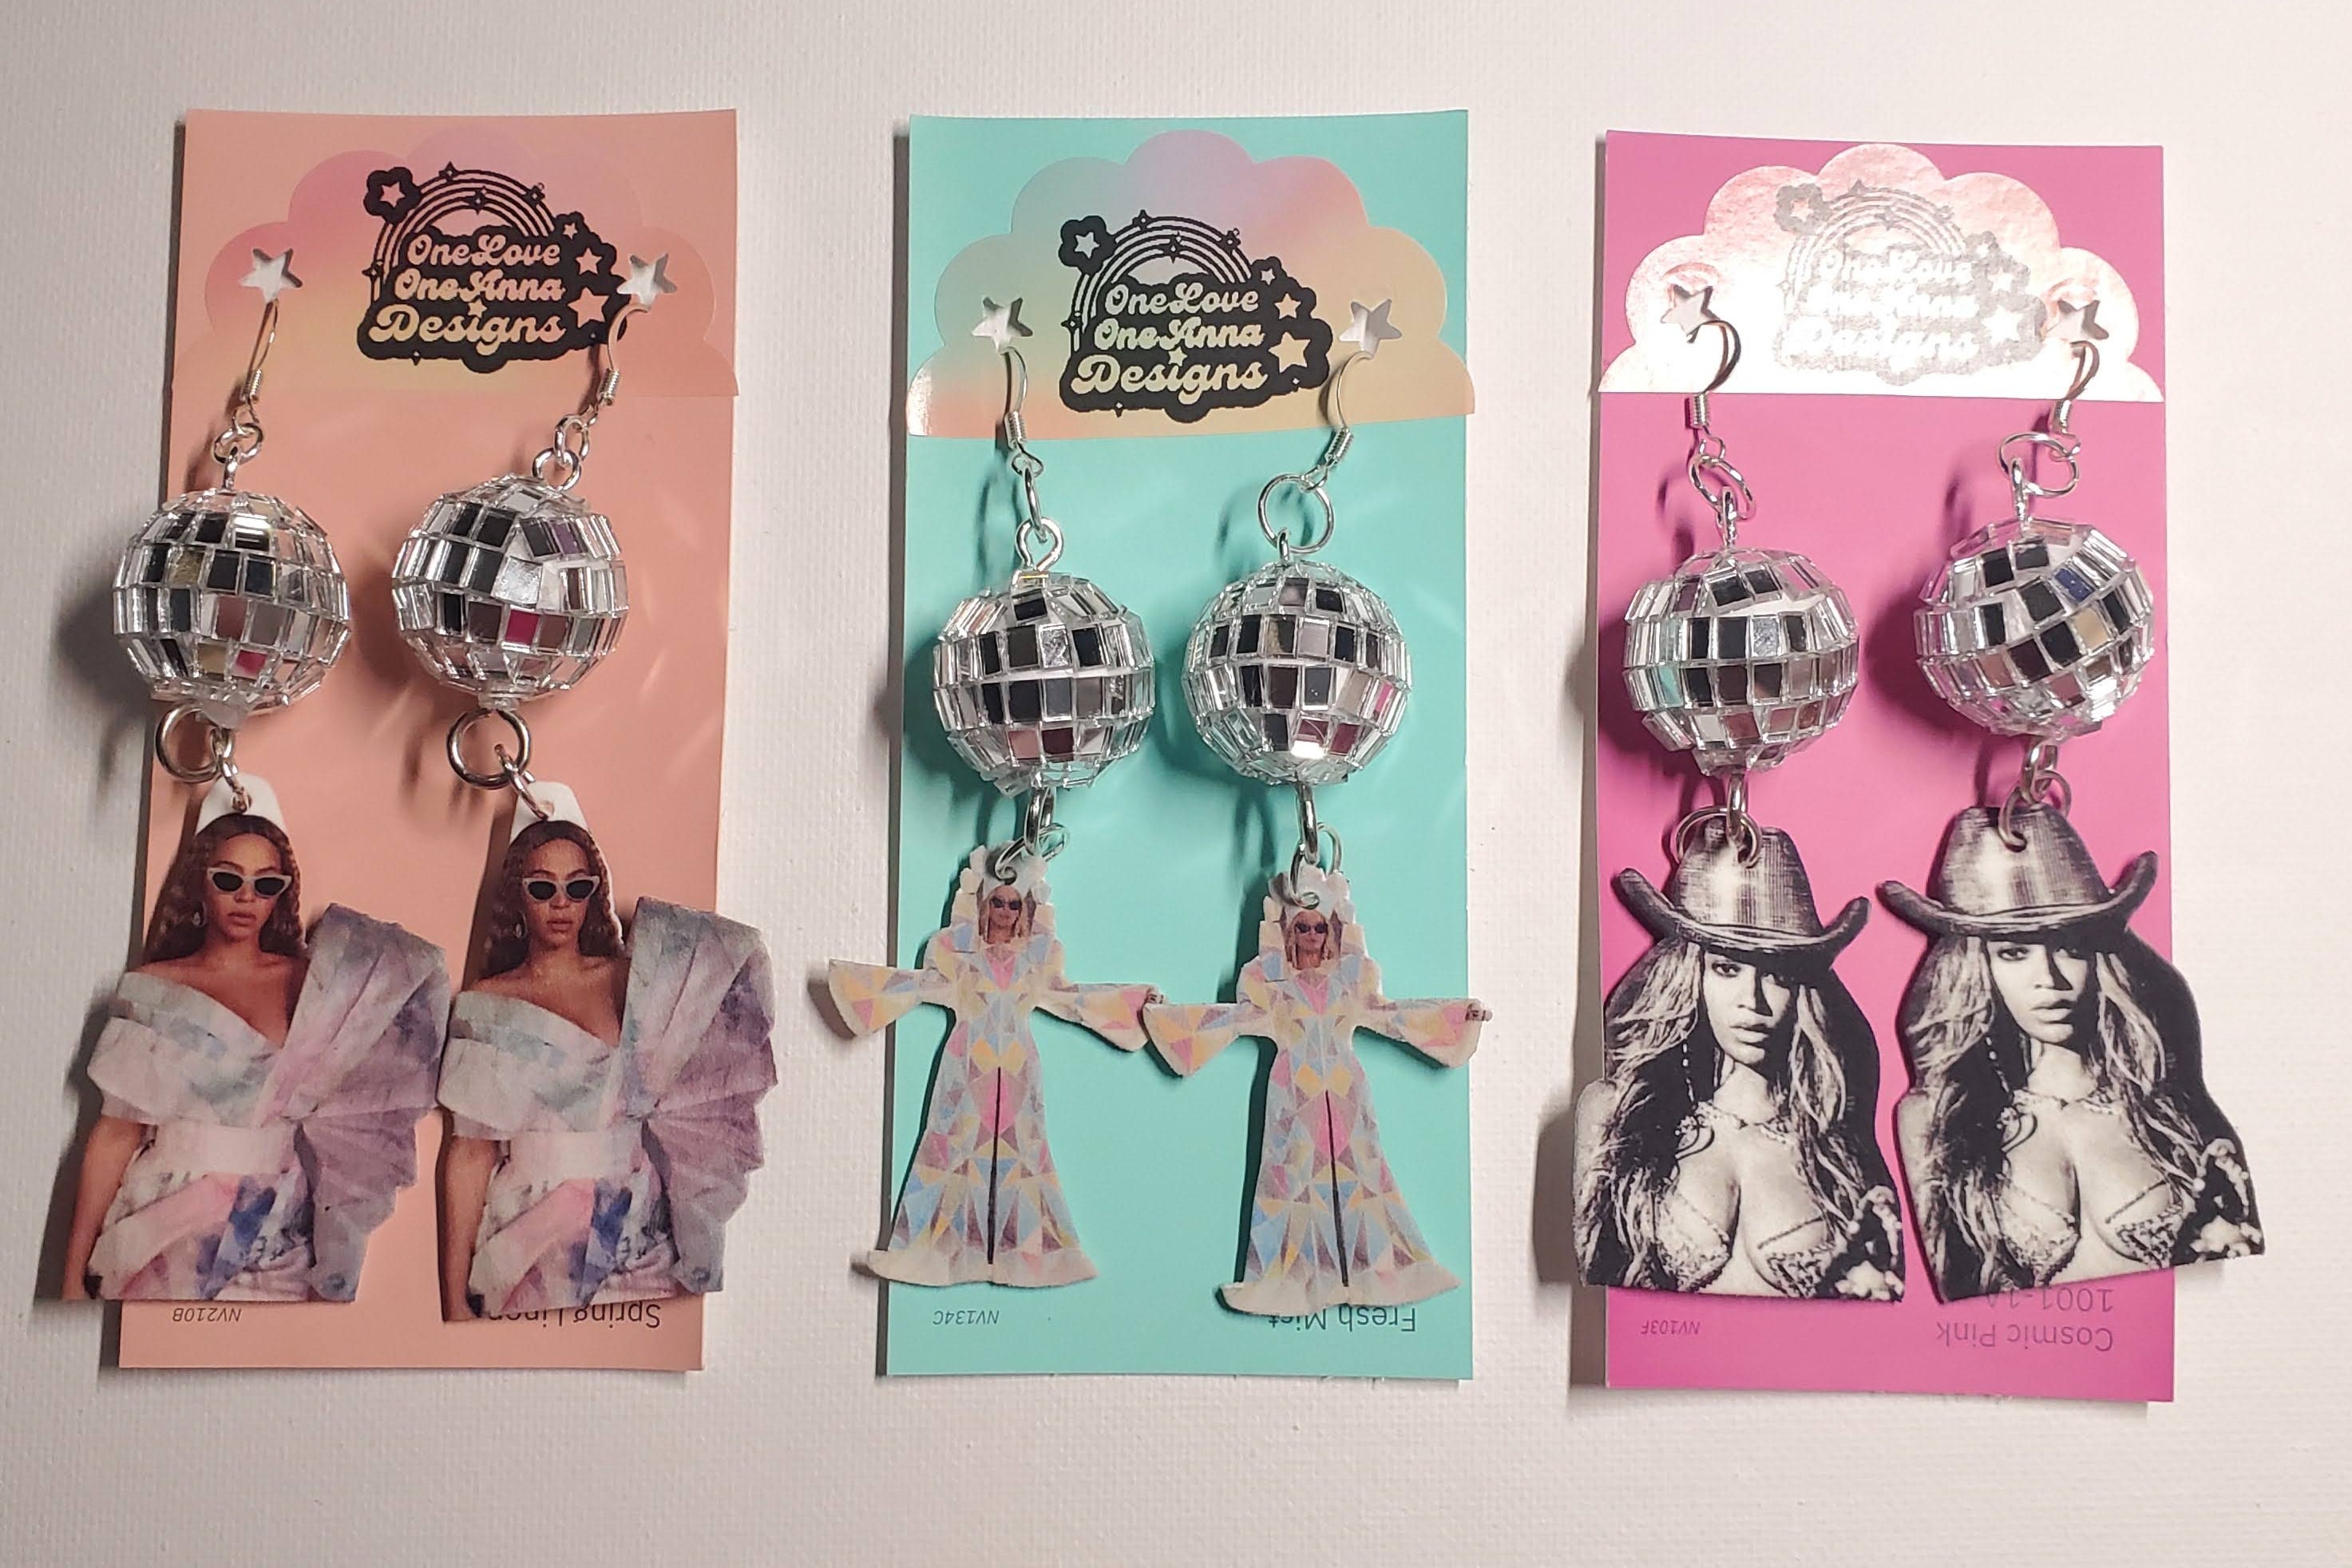 Anna Ferguson’s disco ball earrings featuring Beyoncé’s face